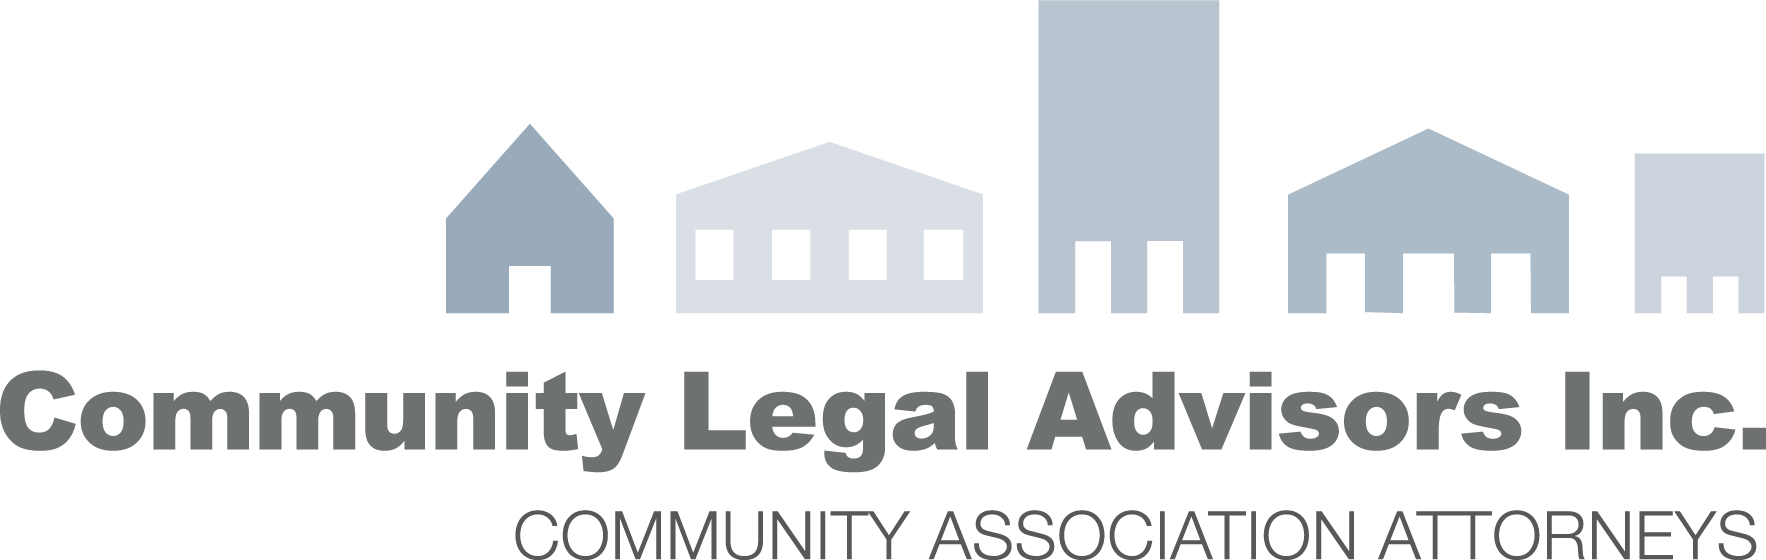 Community Legal Advisors